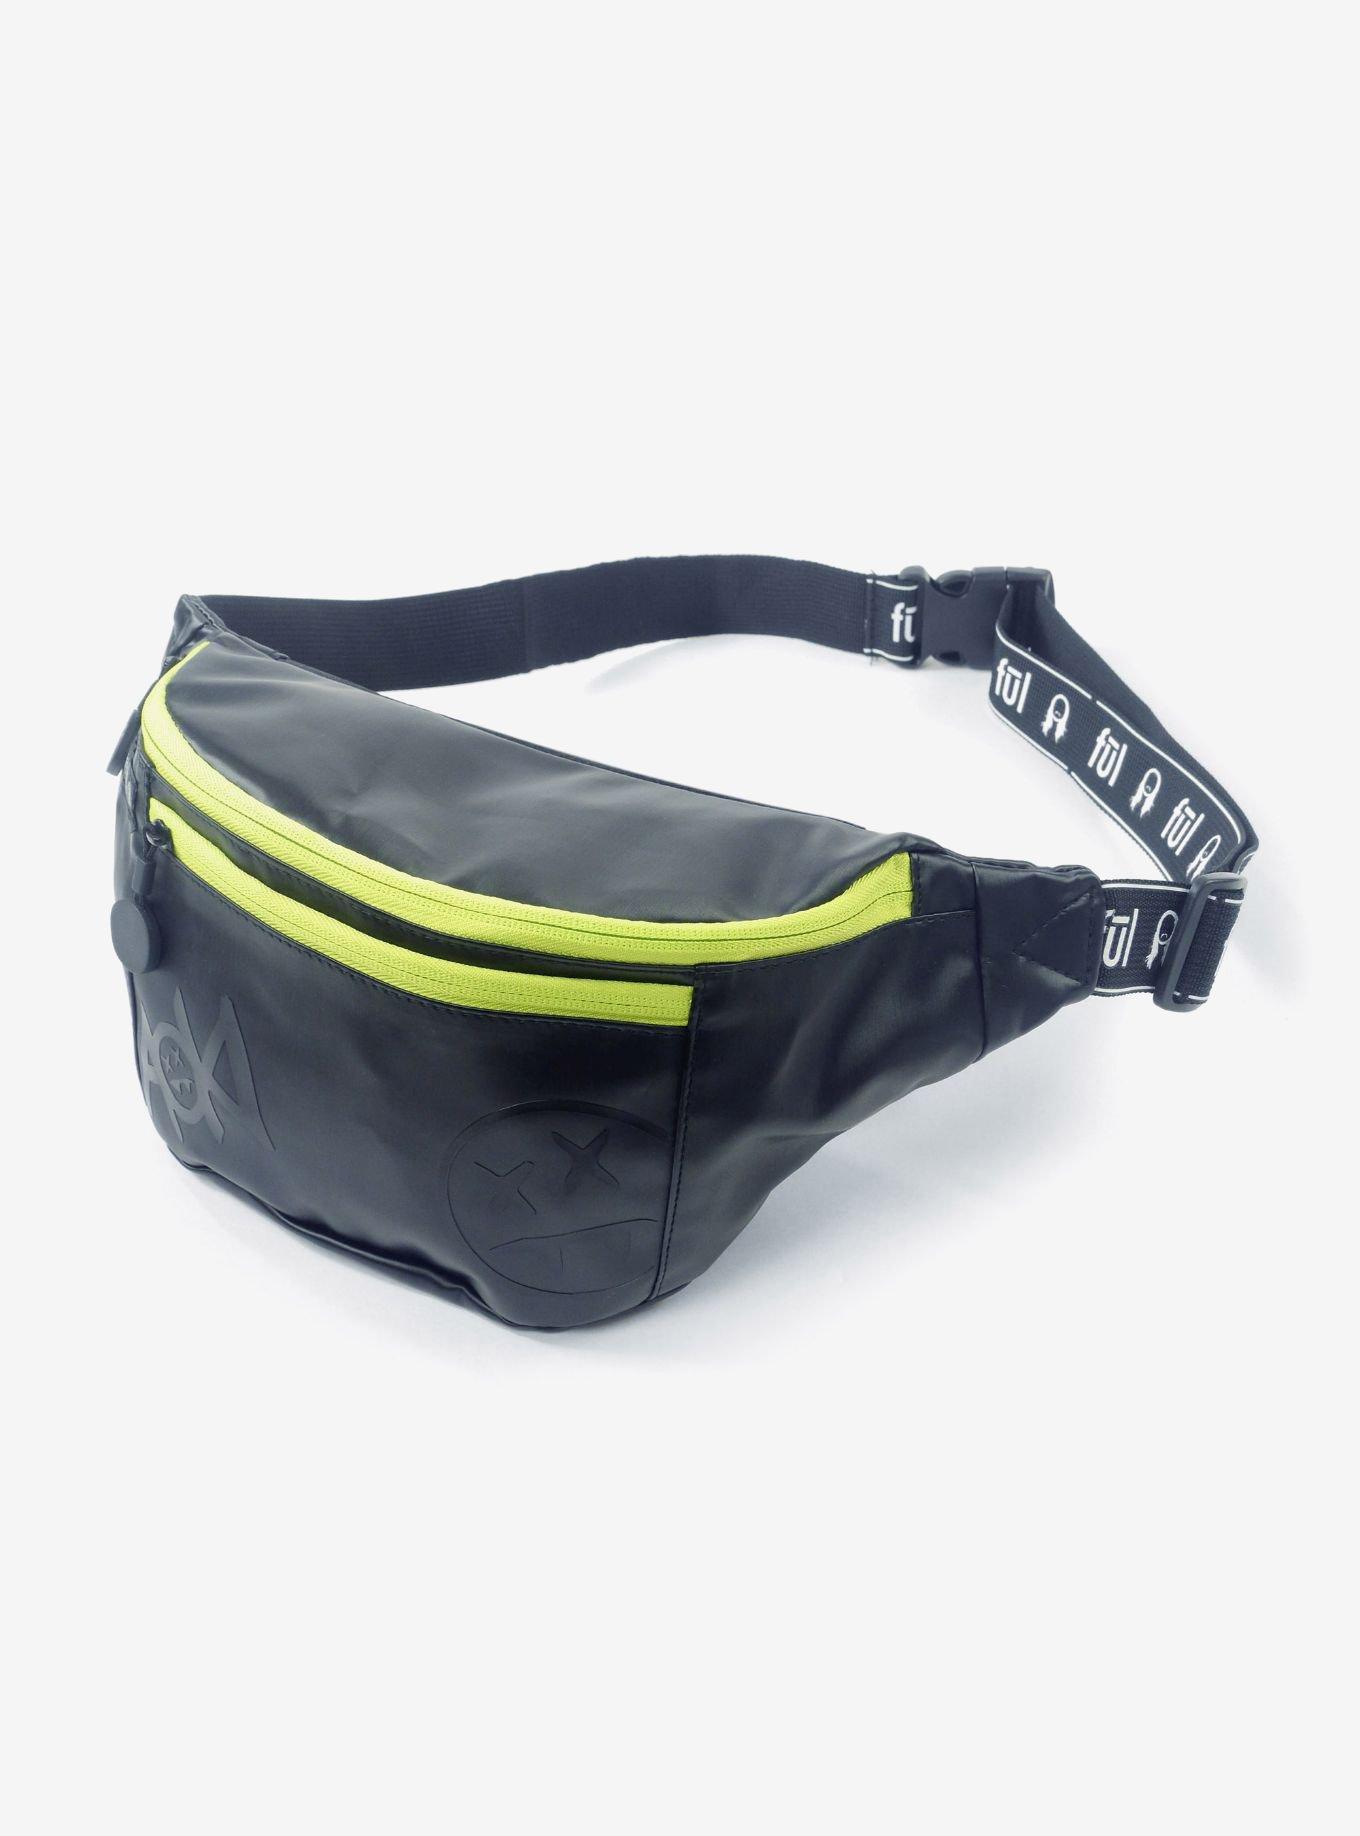 Steve Aoki FUL FANG Black and Neon Green Crossbody Bag, , alternate